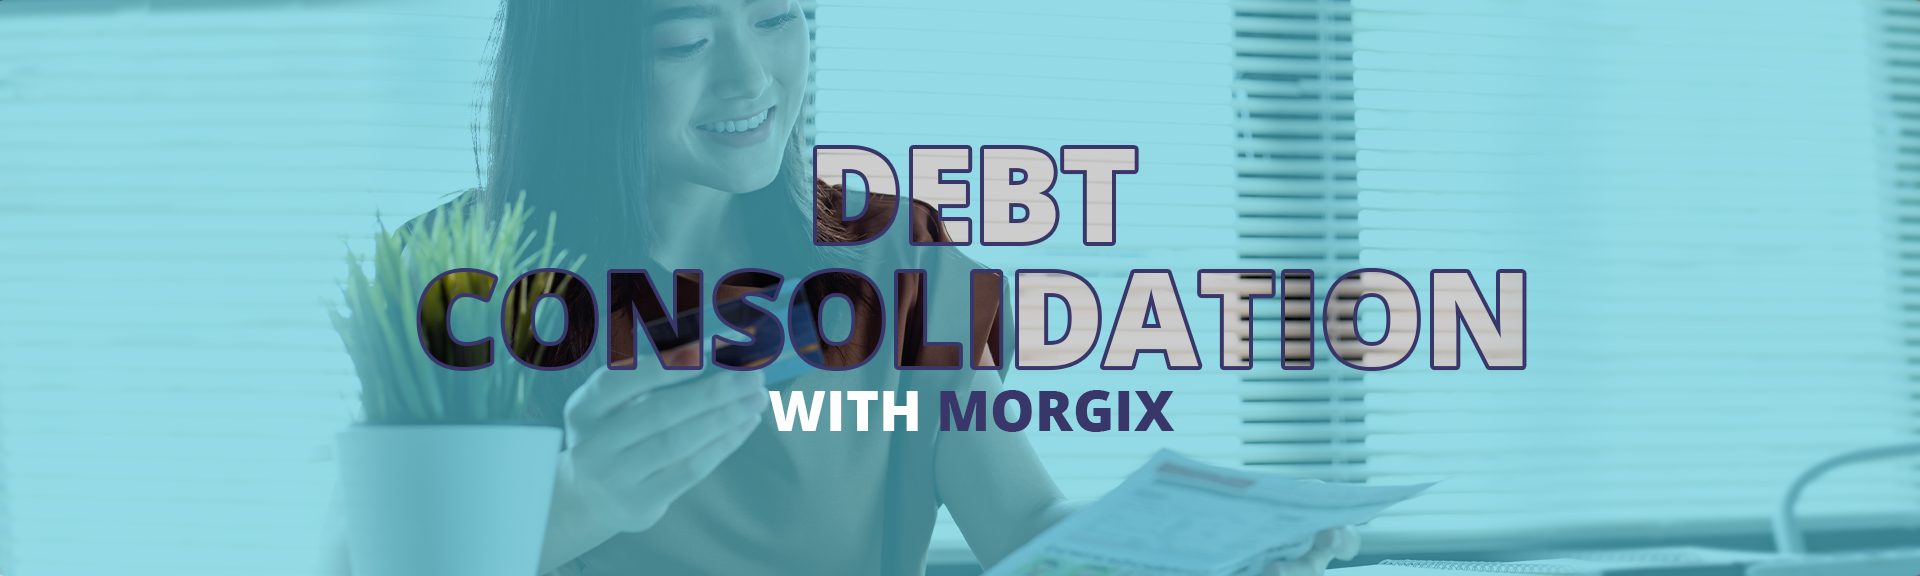 Debt Consolidation Banner